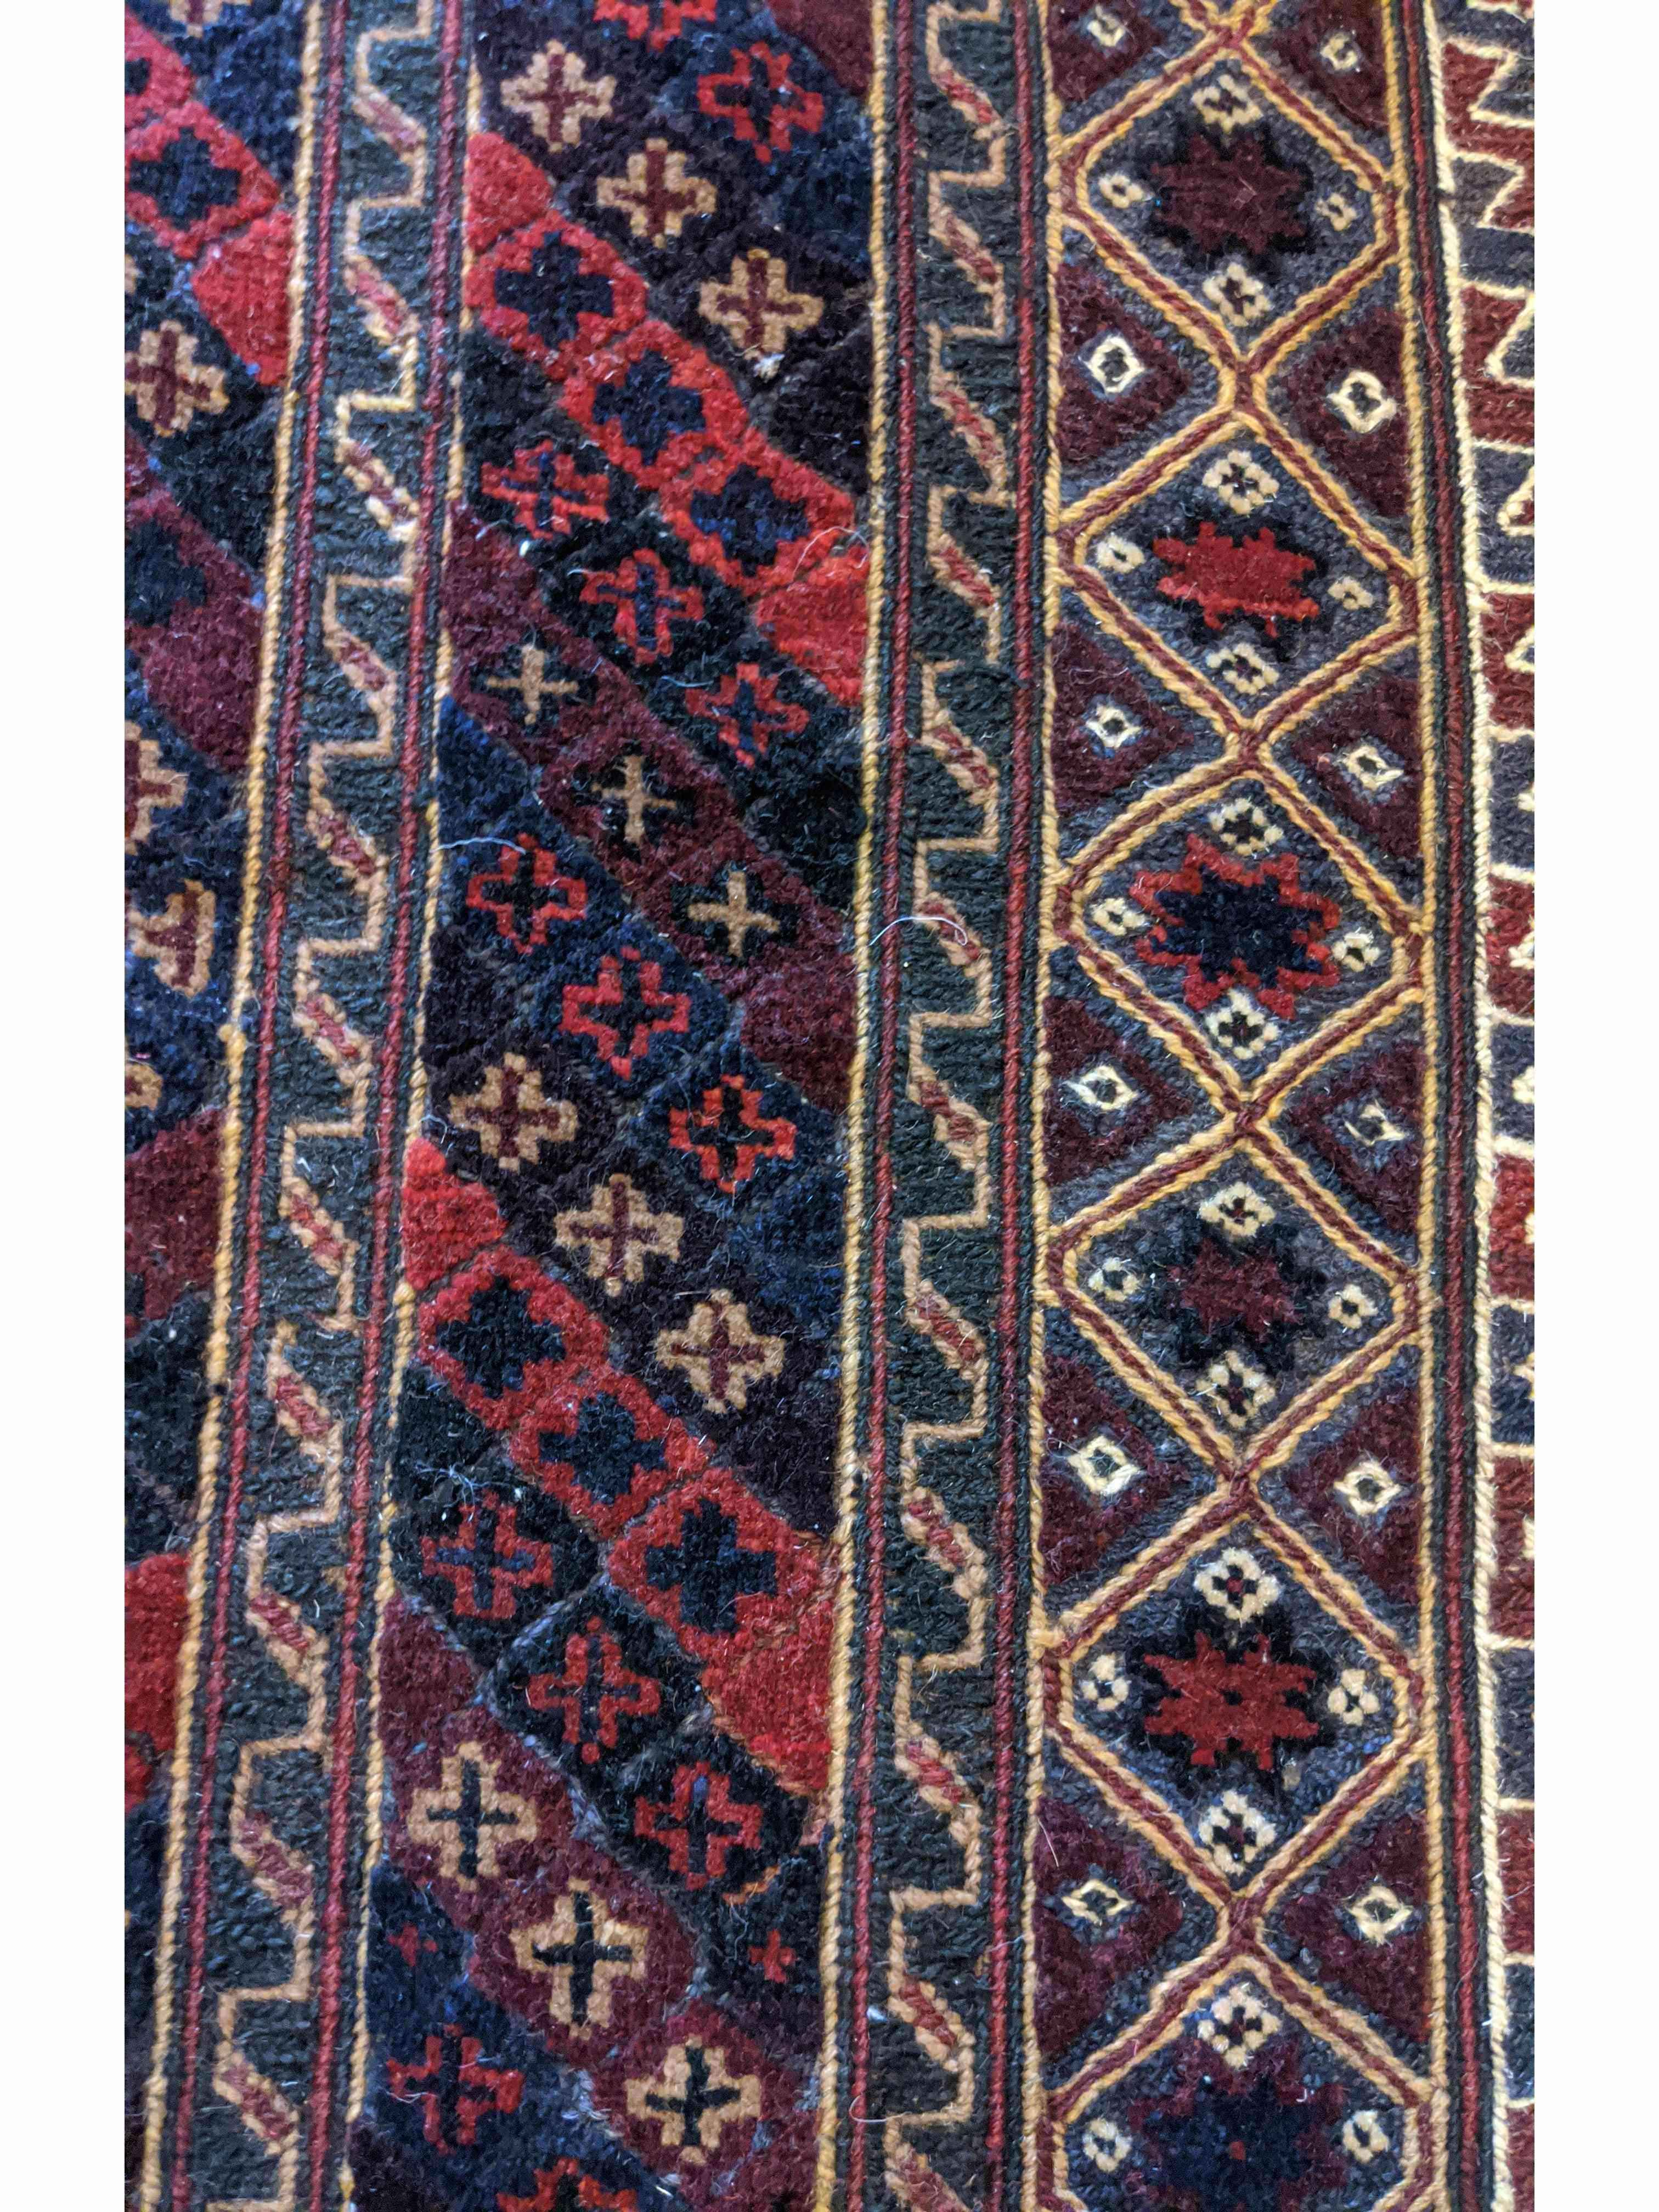 123 x 98 cm Afghan Mushwani Tribal Maroon Small Rug - Rugmaster